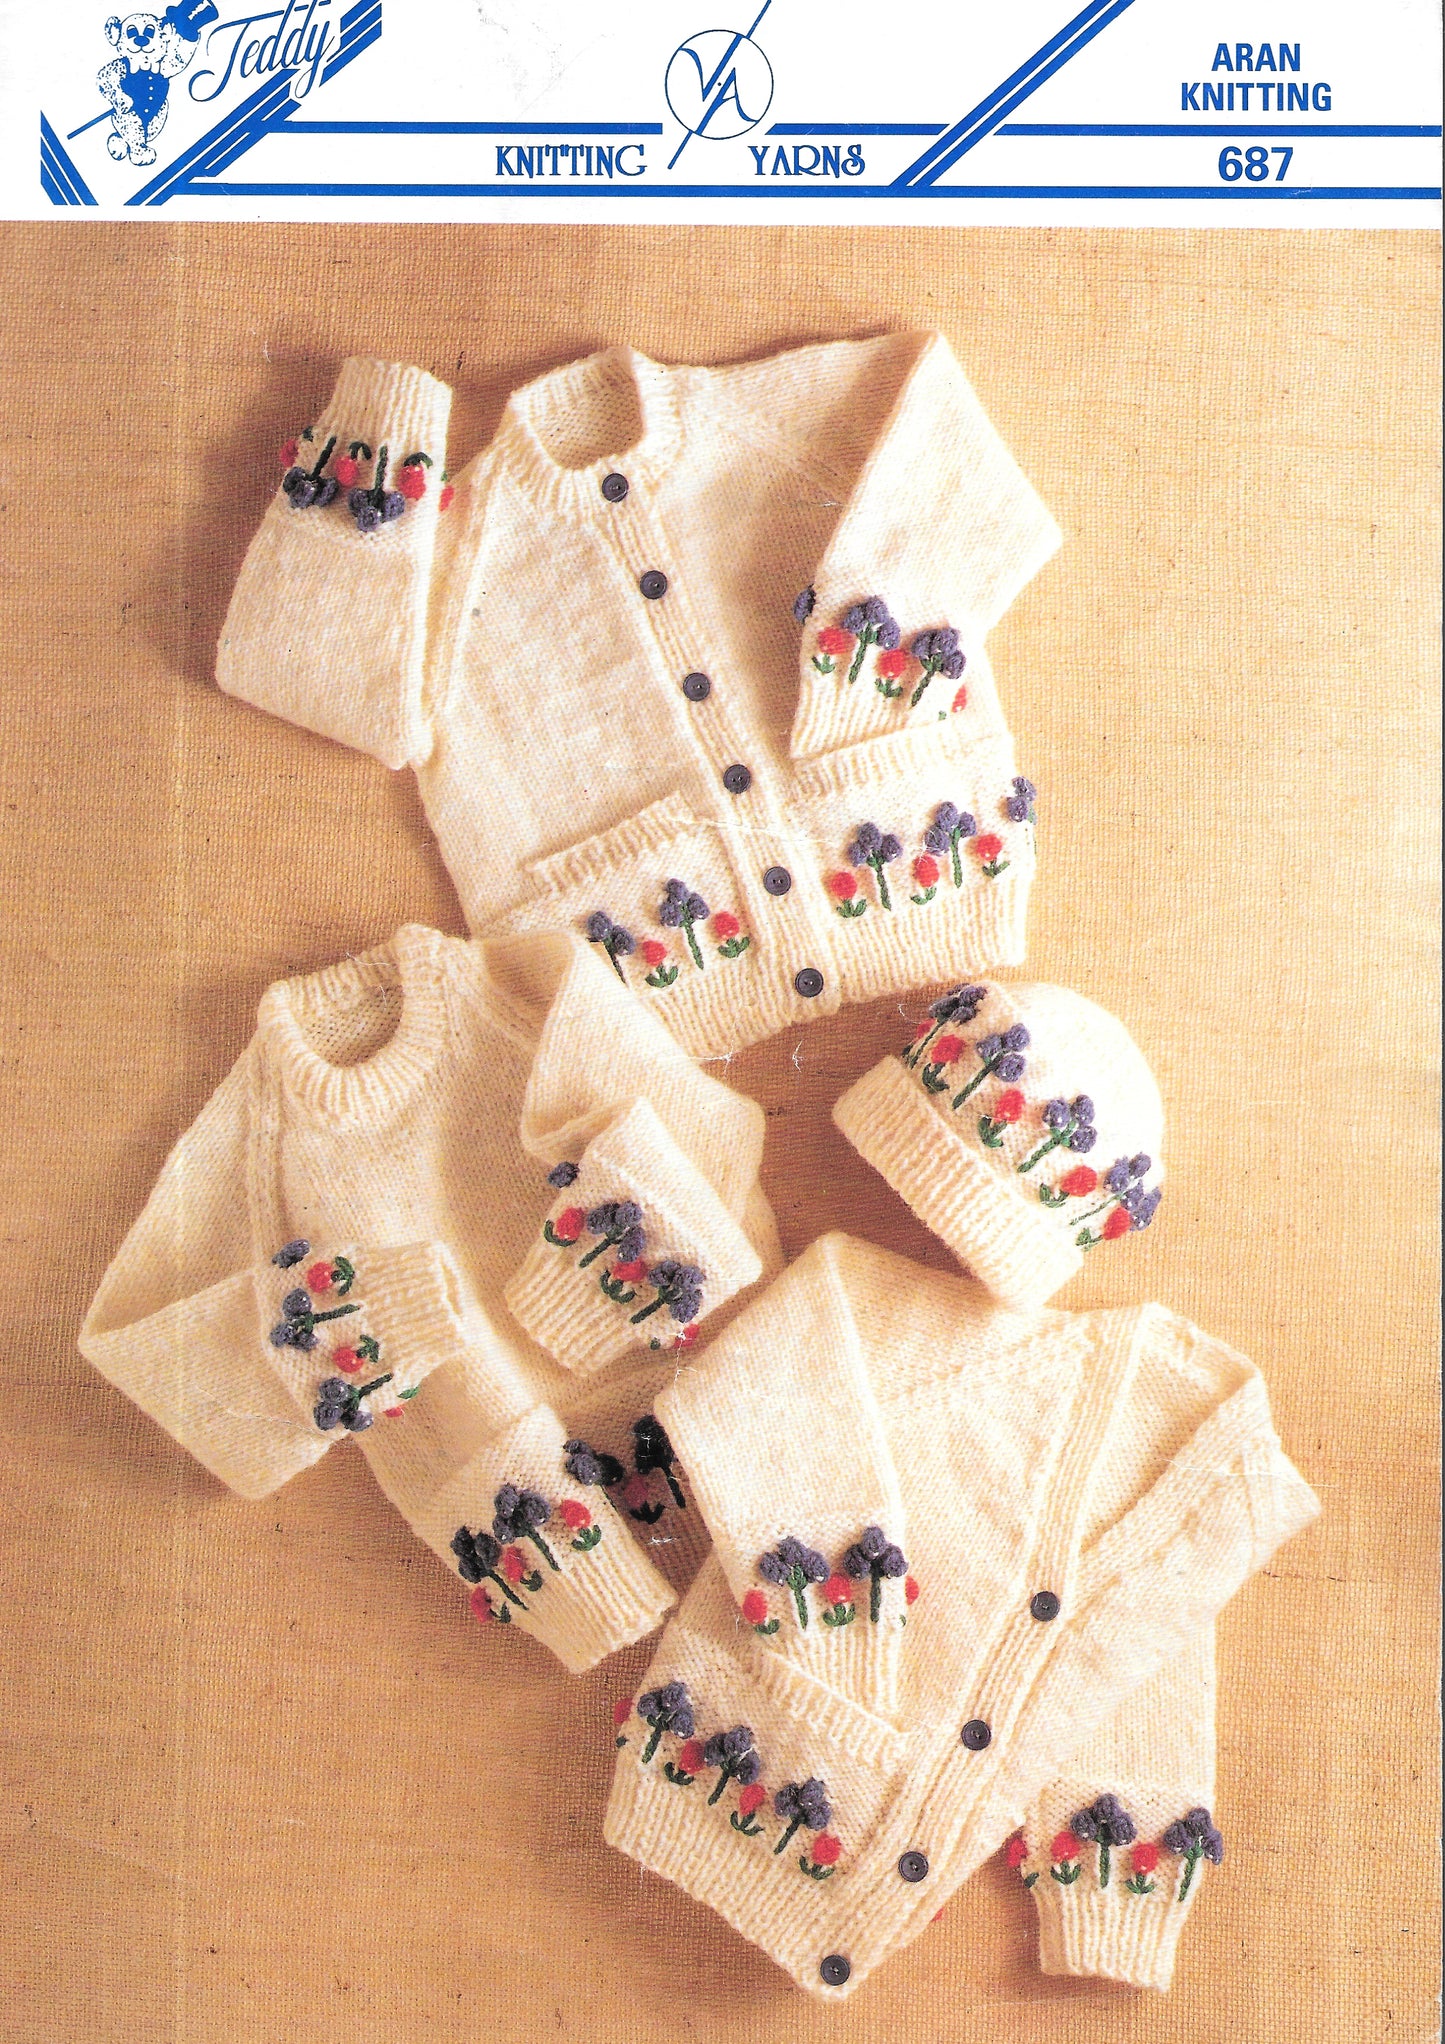 PRELOVED 687 Teddy Knitting Pattern. Child's cardigan/sweater. Aran